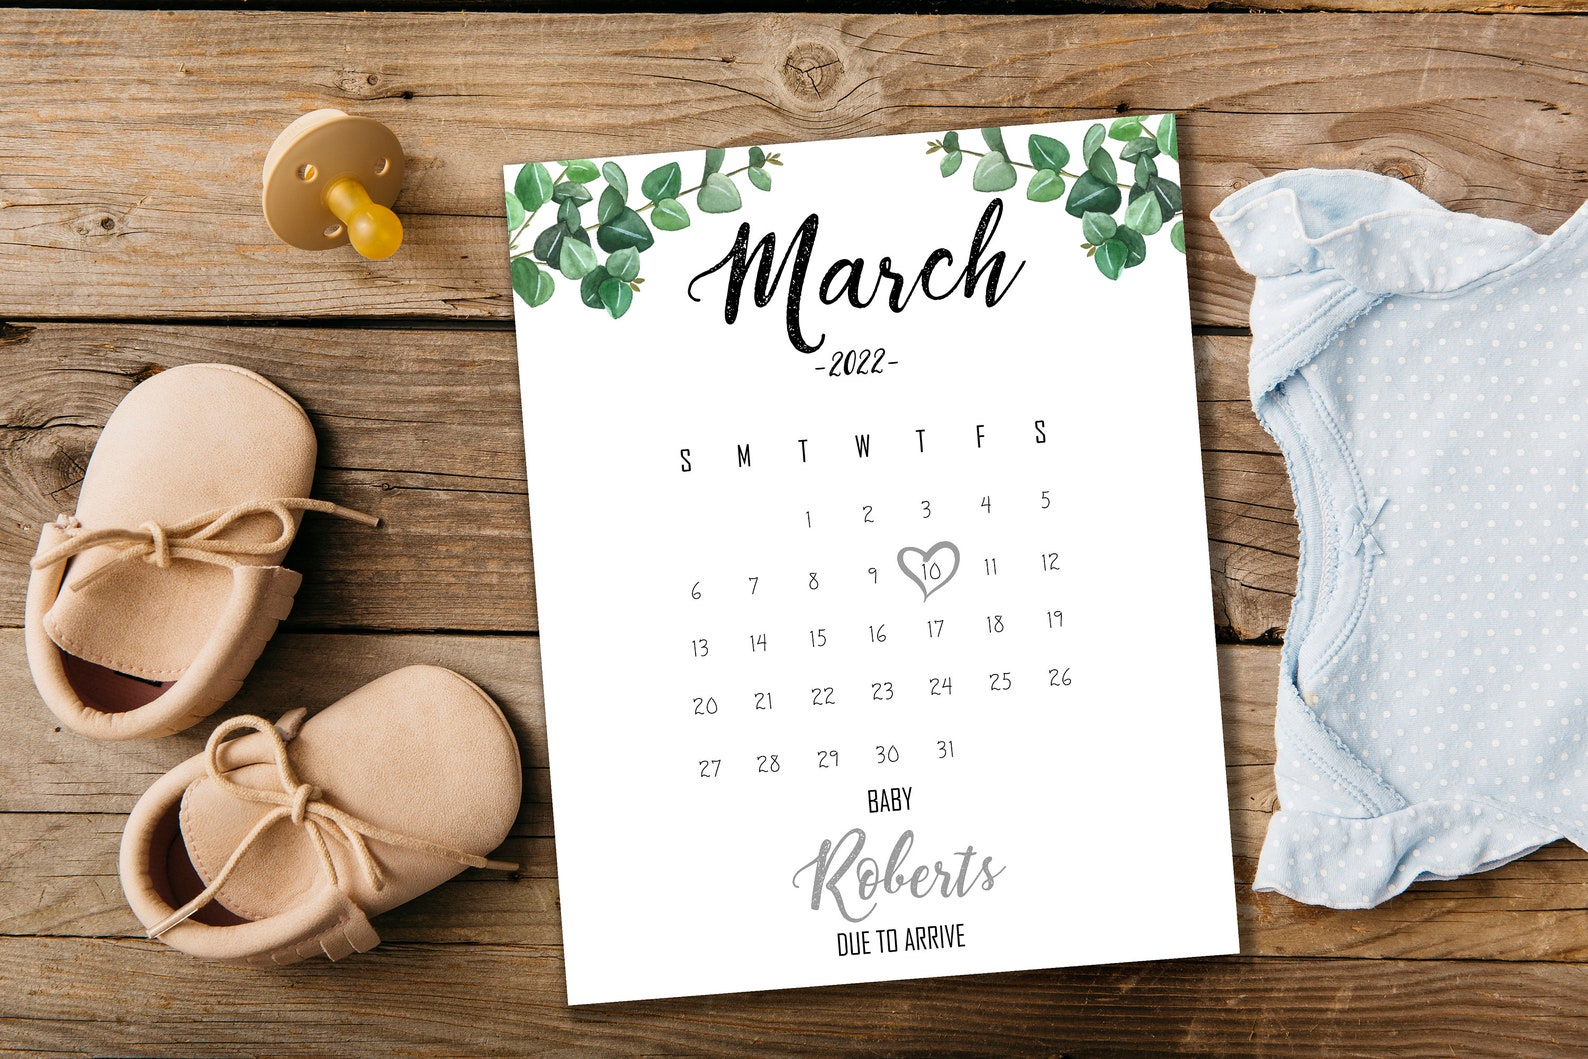 March 2022 Custom Pregnancy Announcement Calendar Social